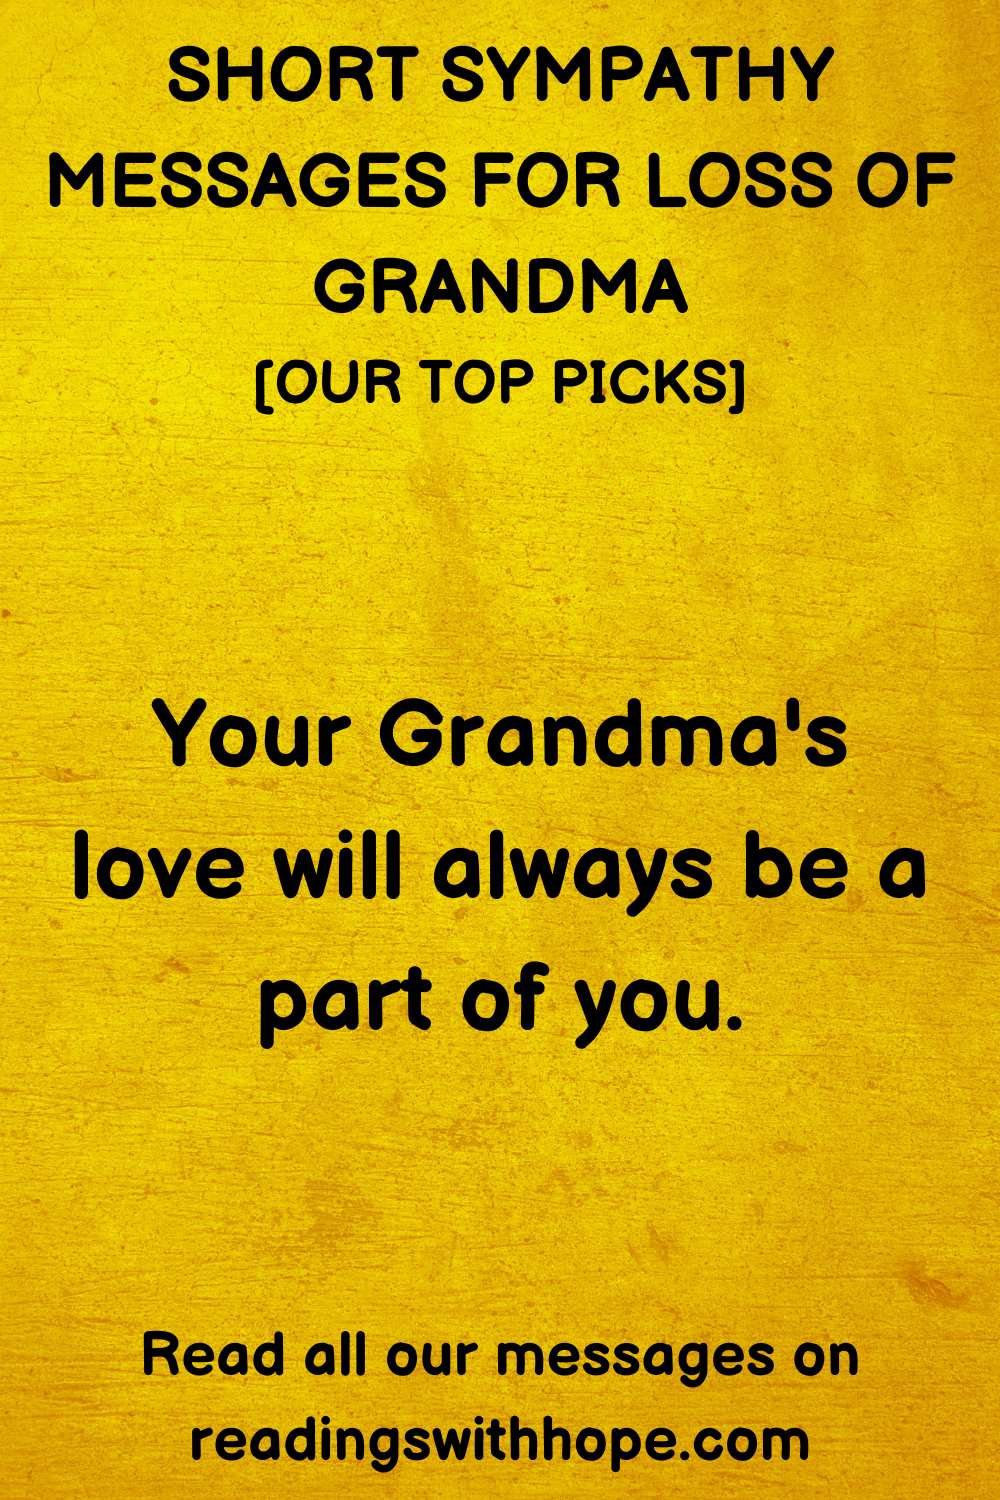 Short Sympathy Message for Loss of Grandma
